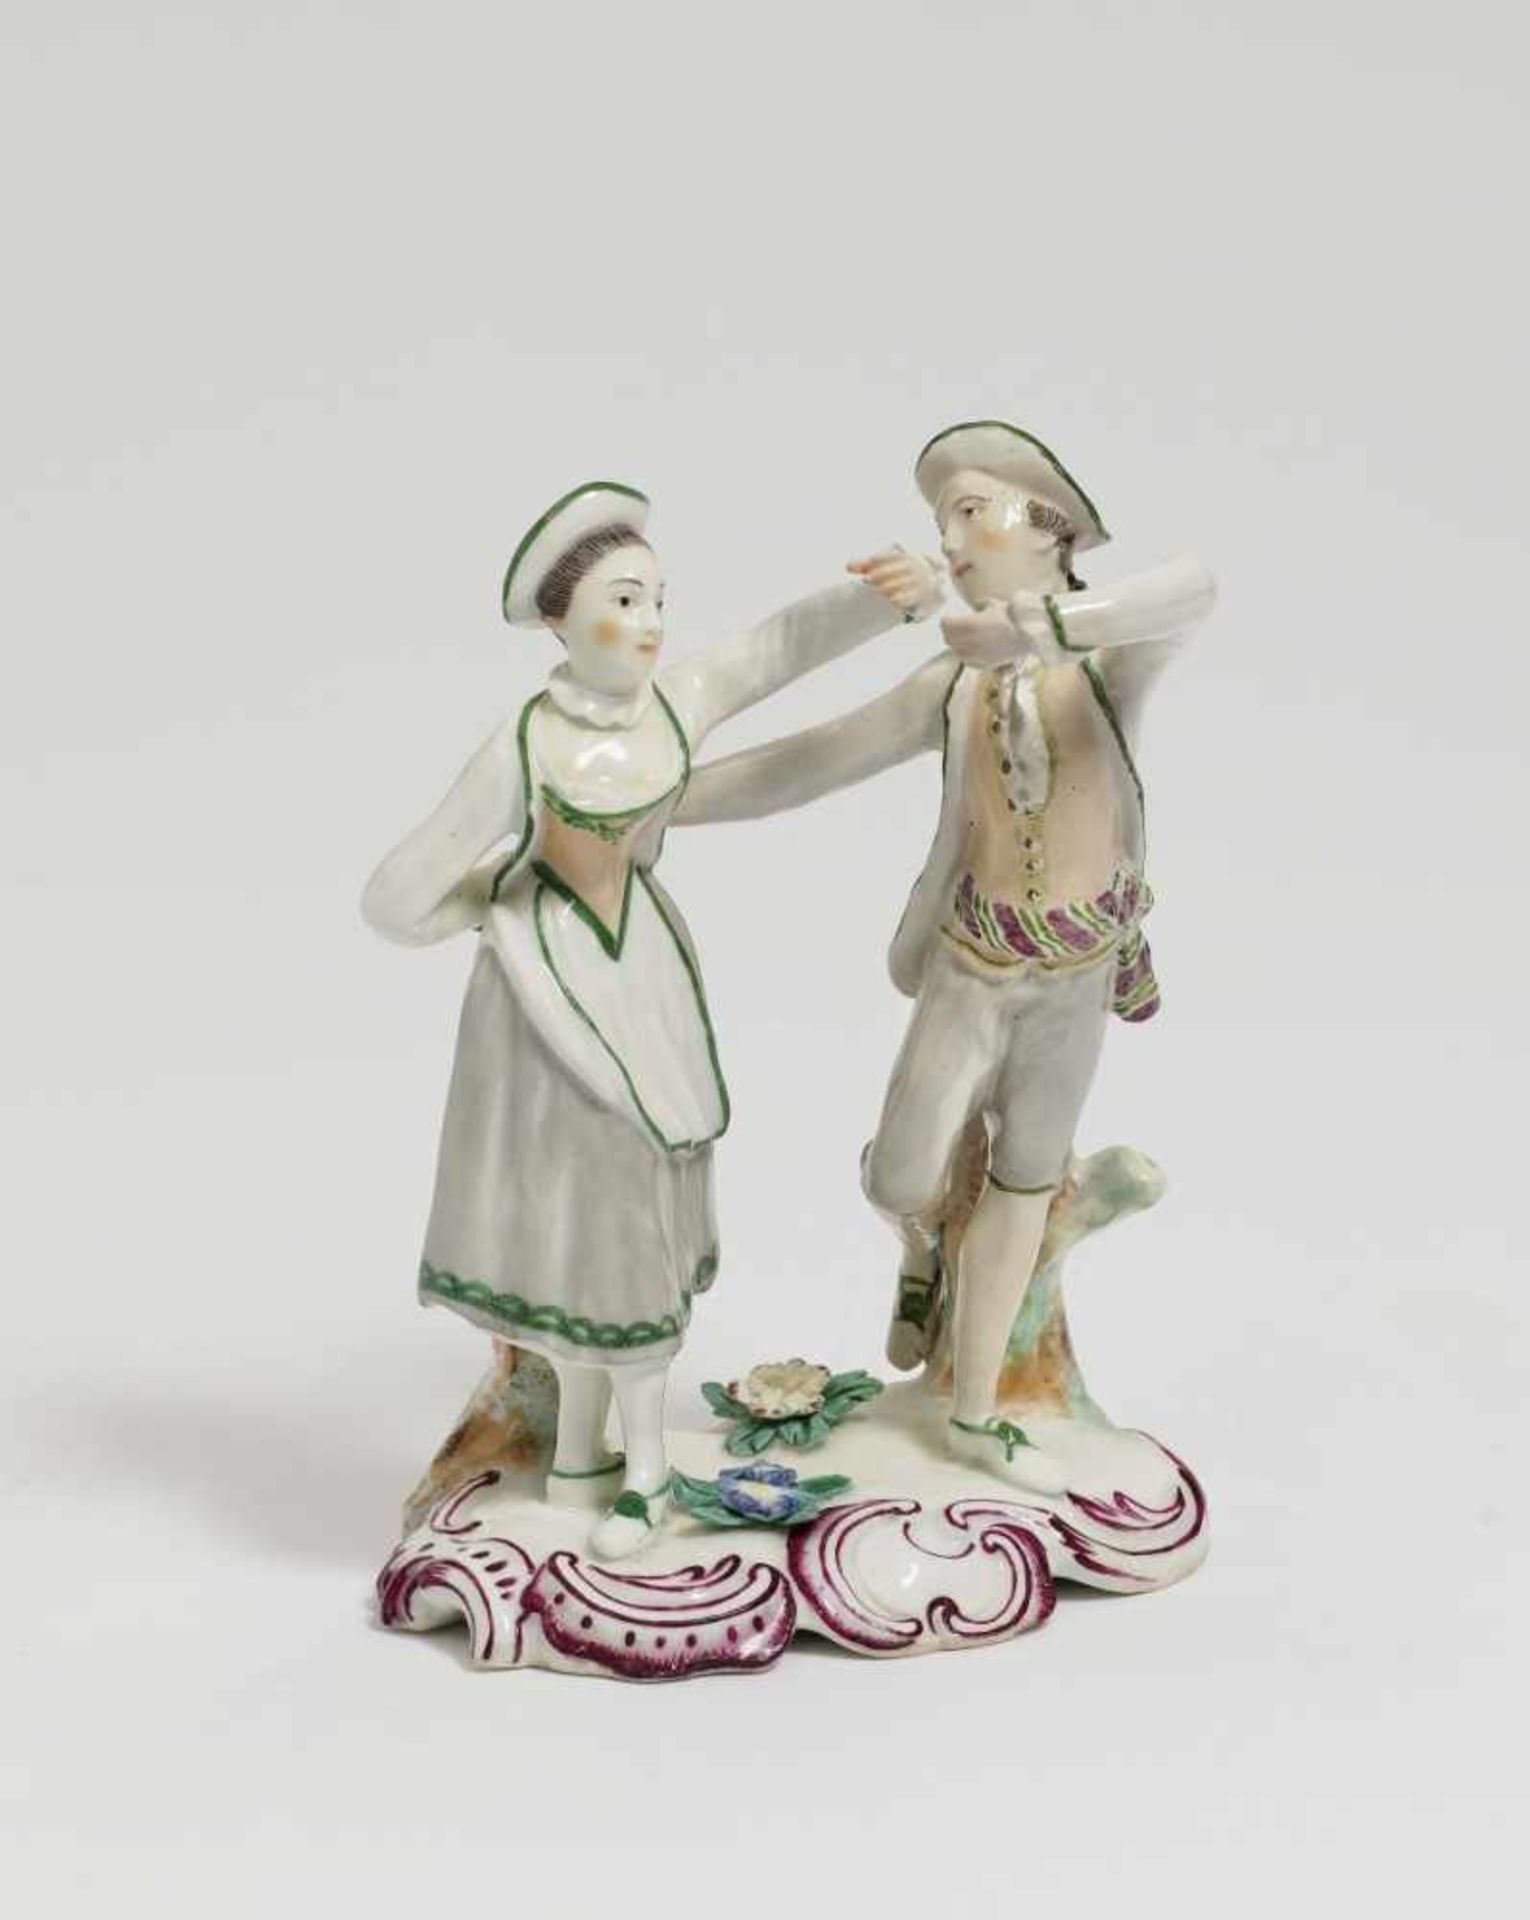 Rural Dancing CoupleLudwigsburg, circa 1760/1765, model by Joseph Nees Porcelain. Polychrome